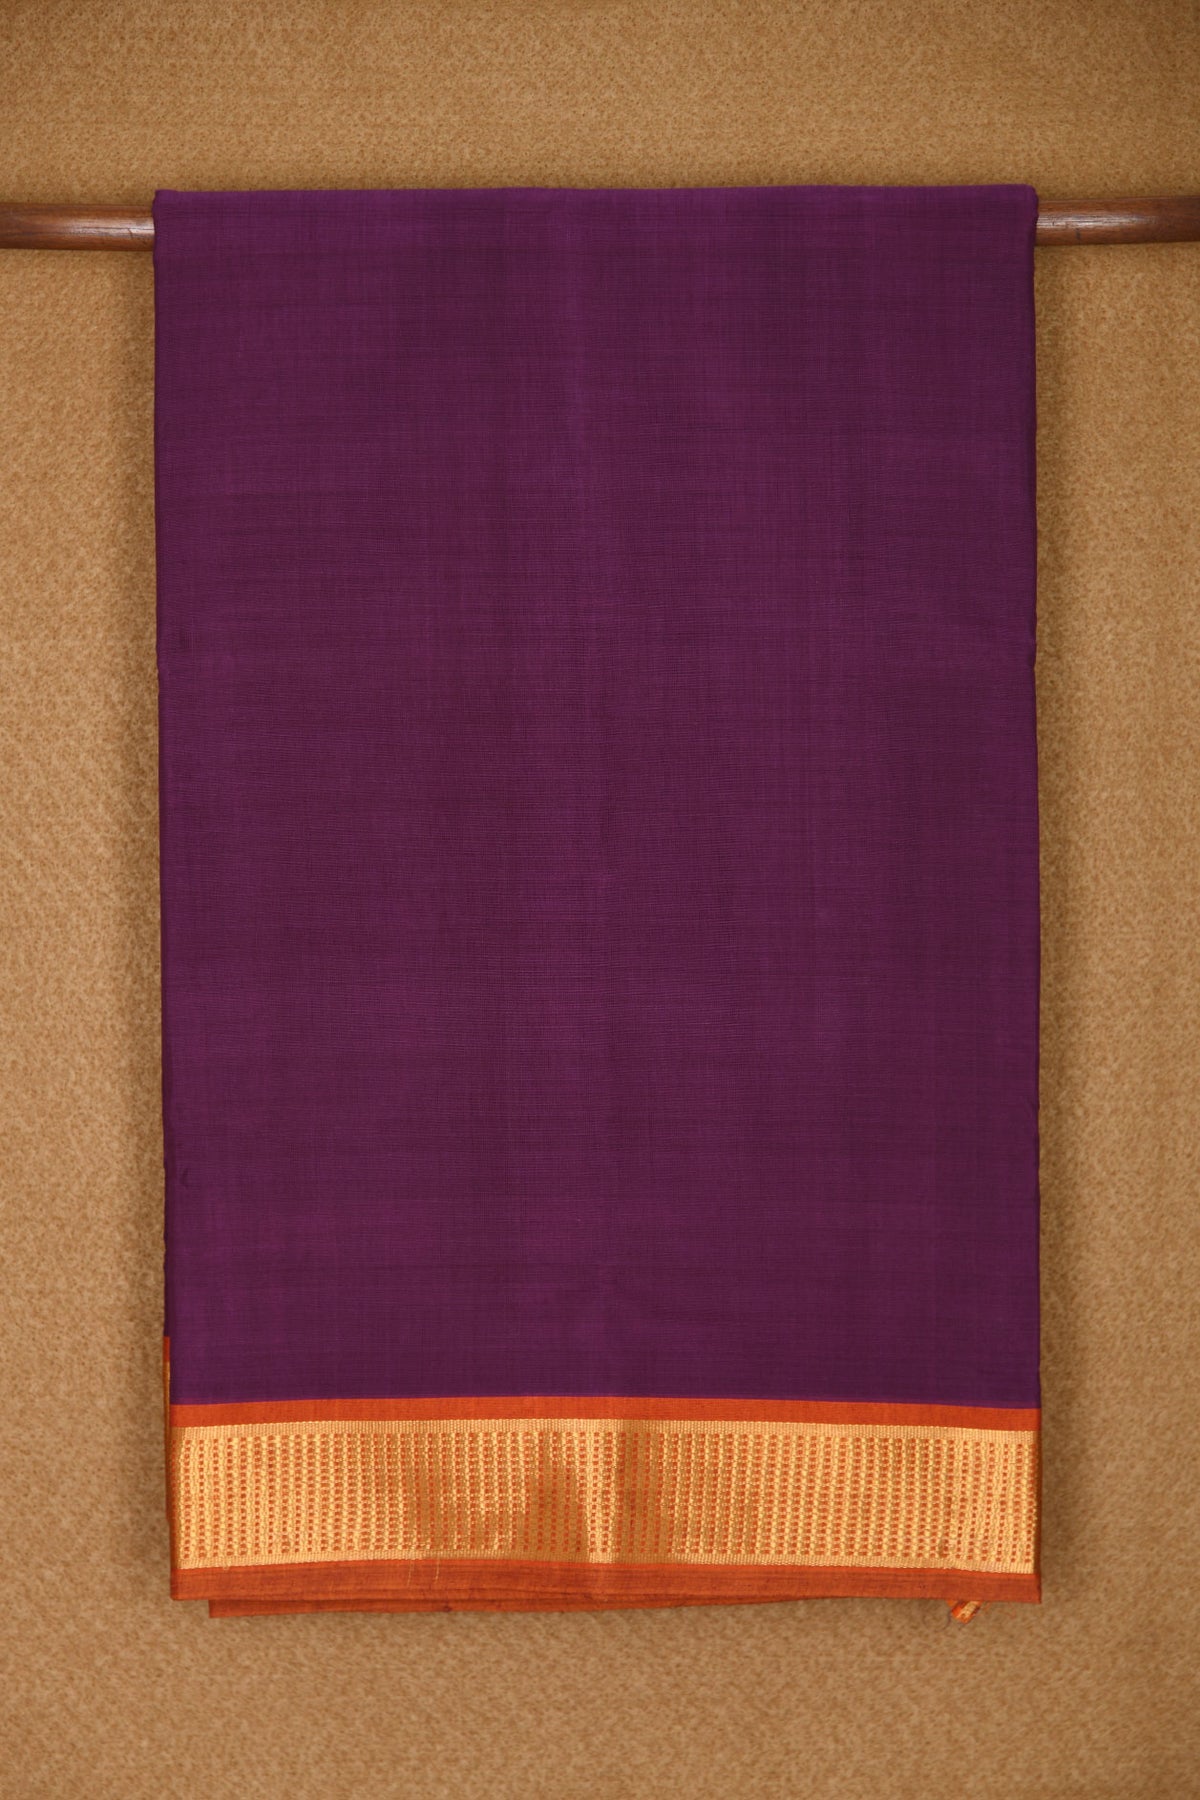 Contrast Zari Border In Plain Burgundy Purple Nine Yards Silk Cotton Saree